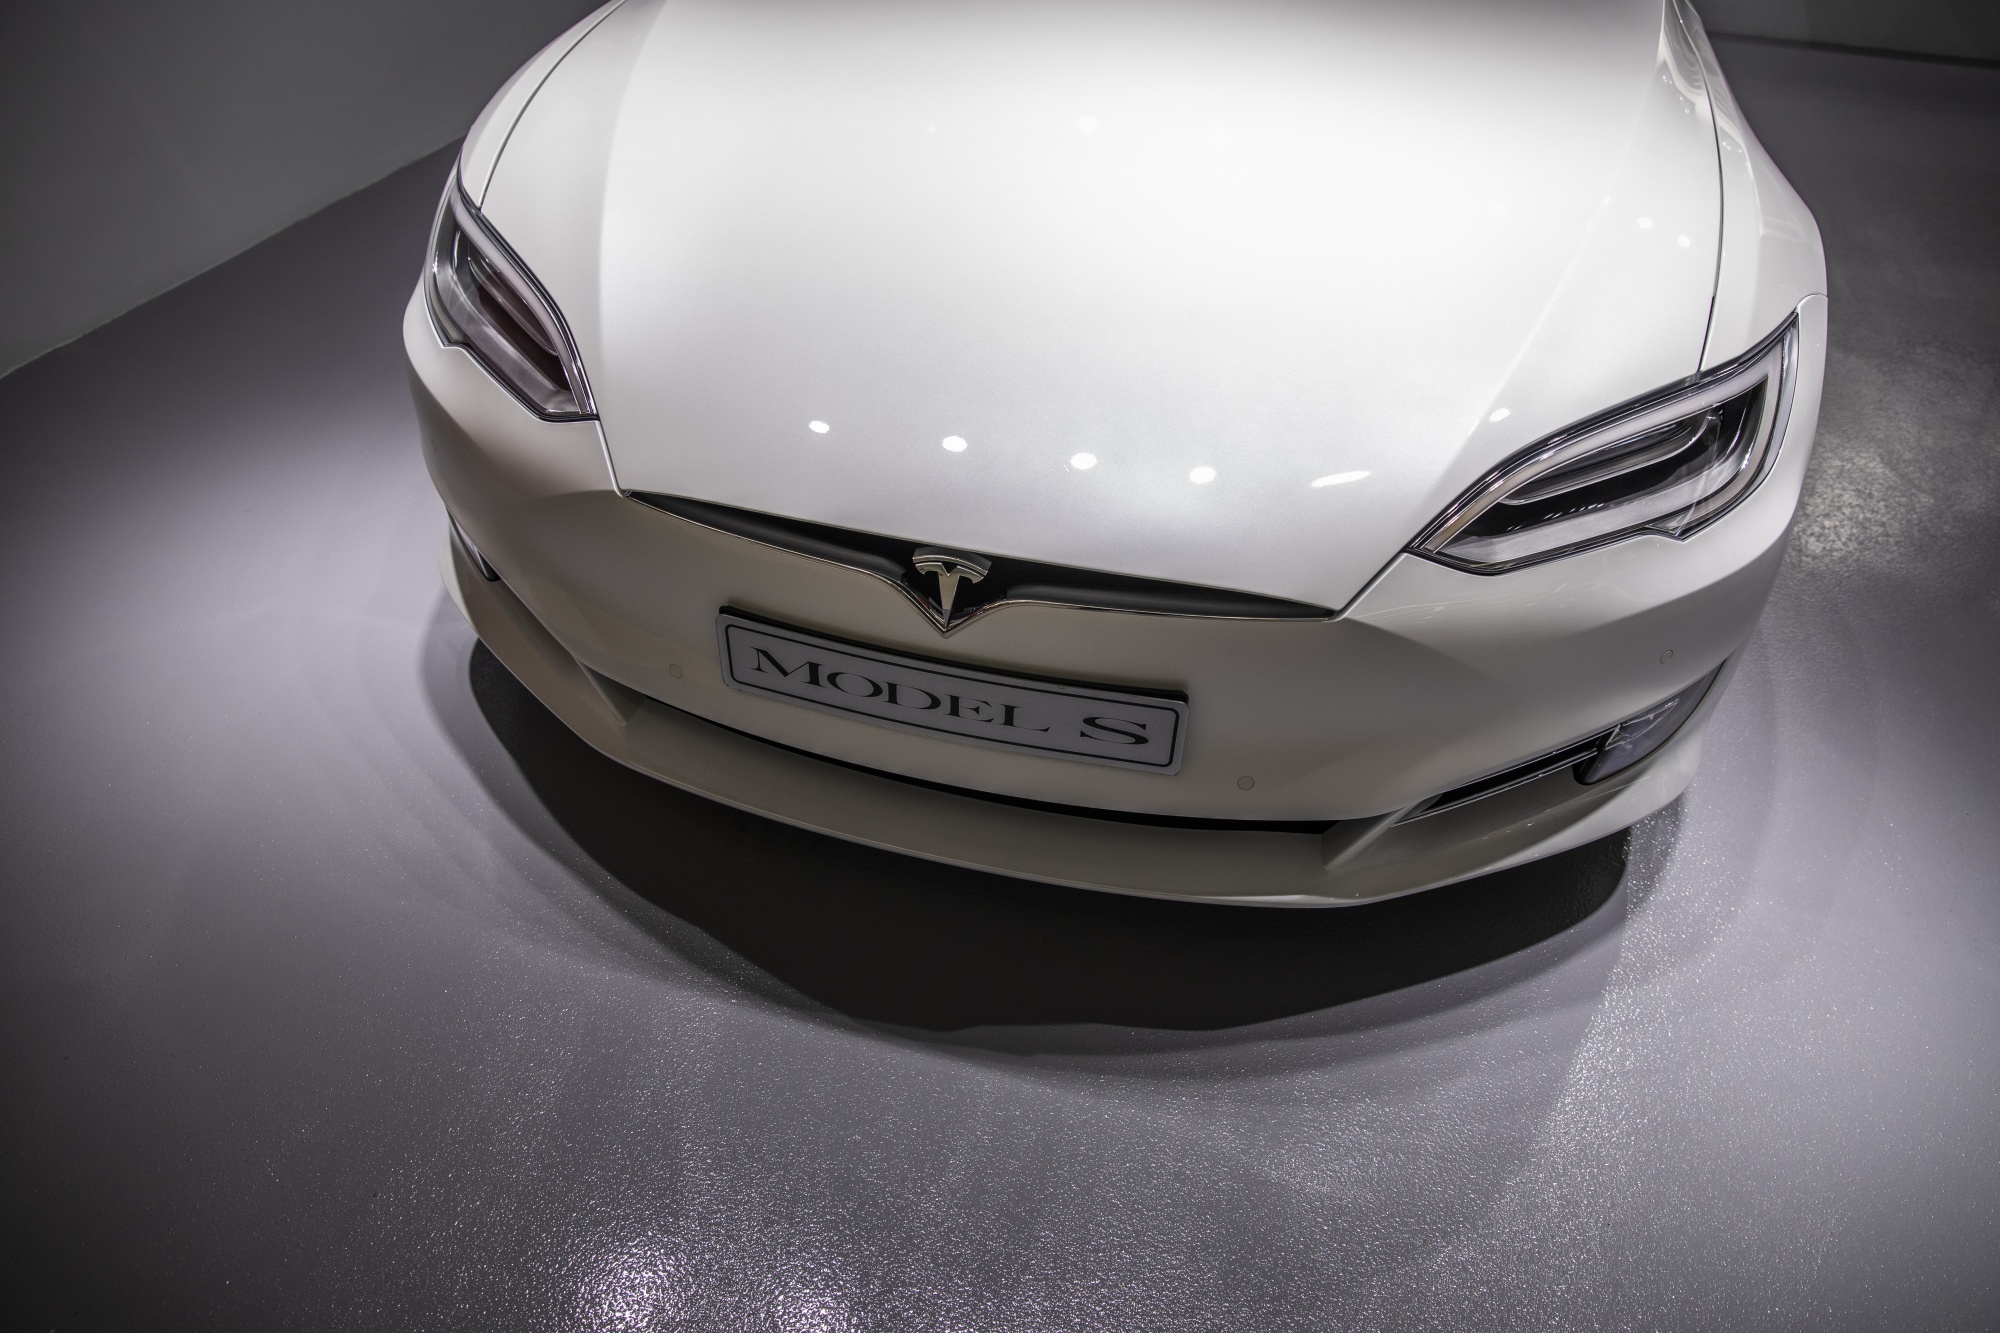 A Tesla Inc. Model S electric vehicle.